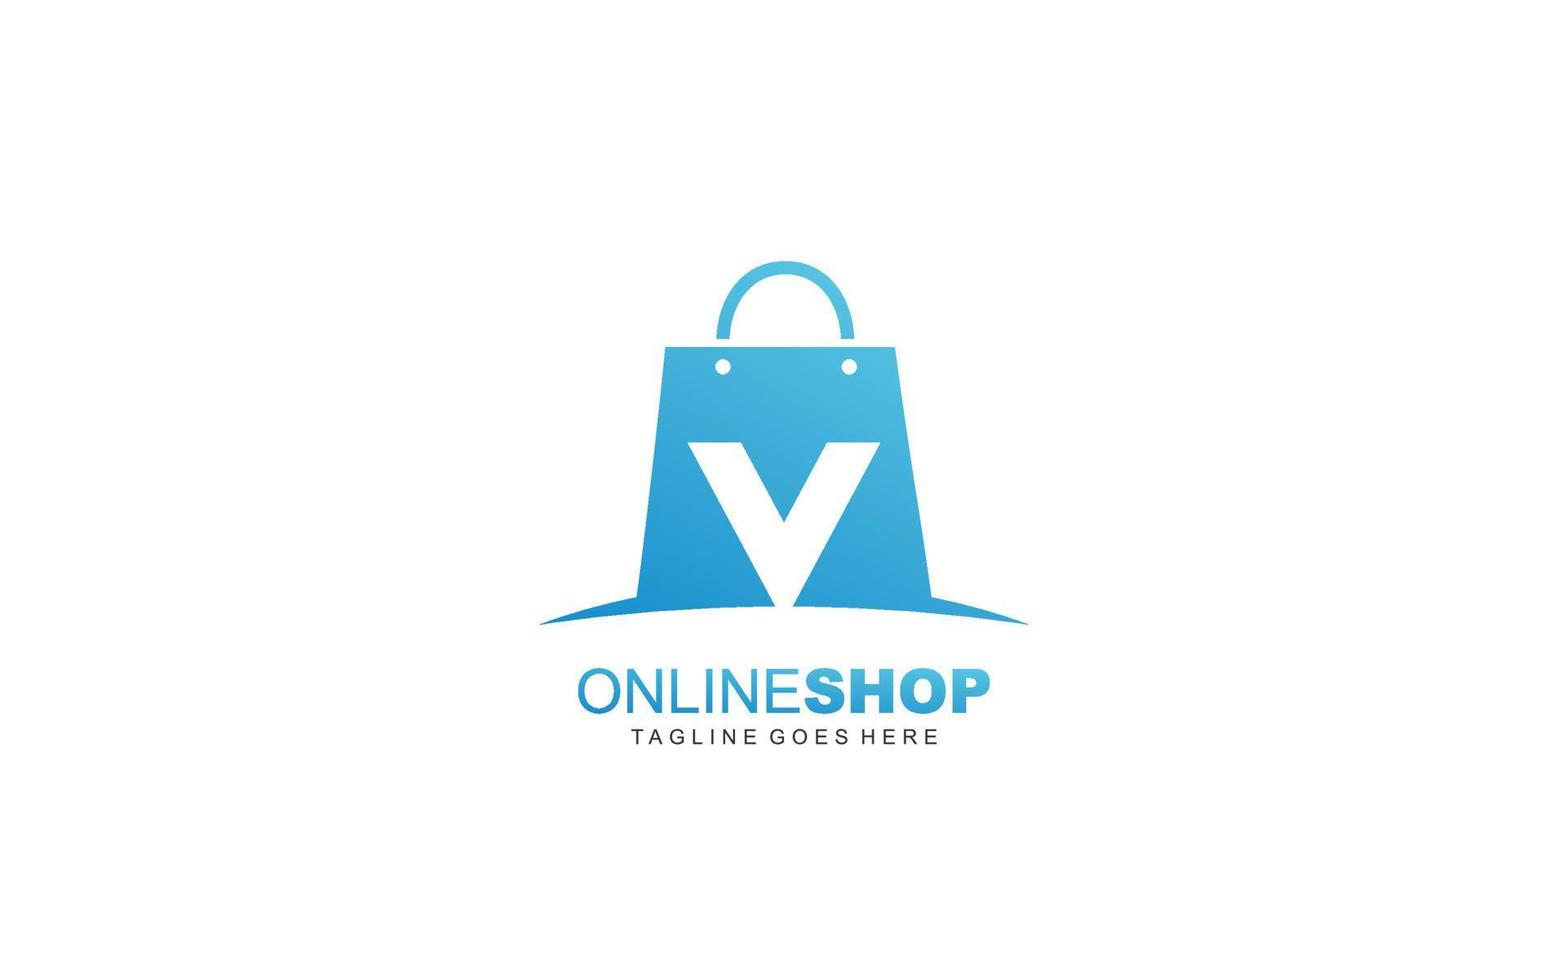 V logo online shop for branding company. BAG template vector illustration for your brand.